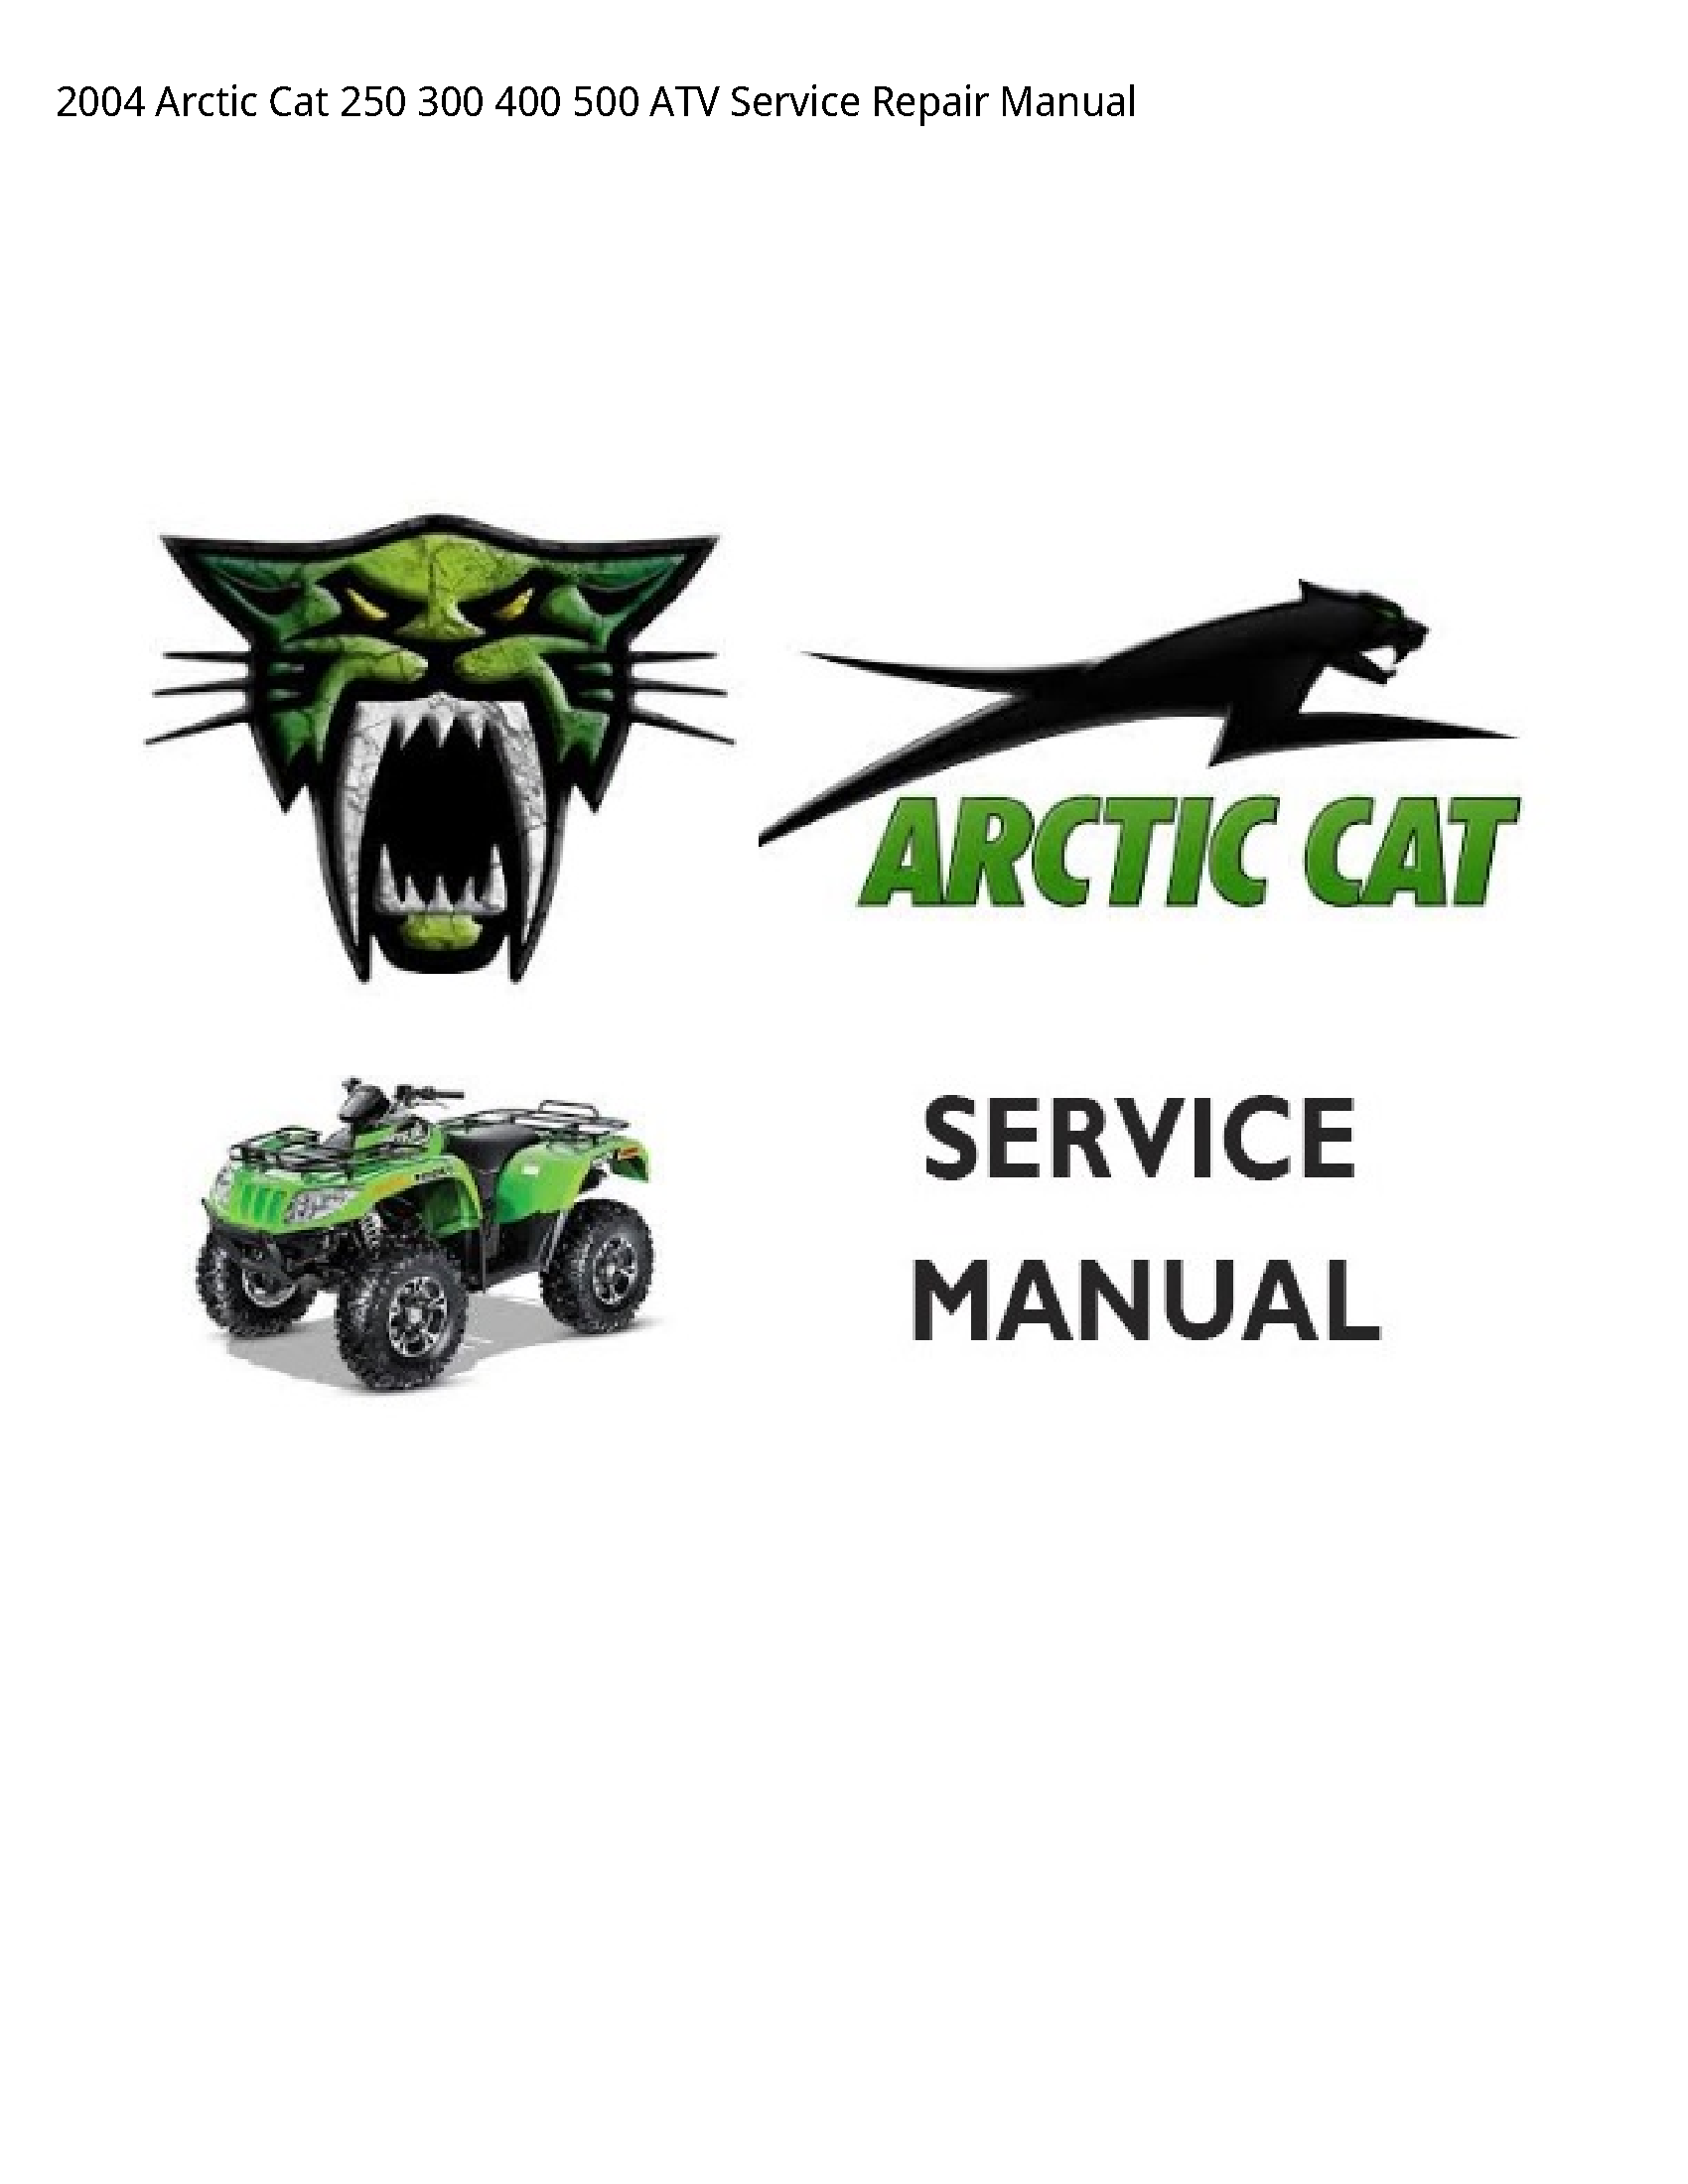 Arctic Cat 250 ATV manual